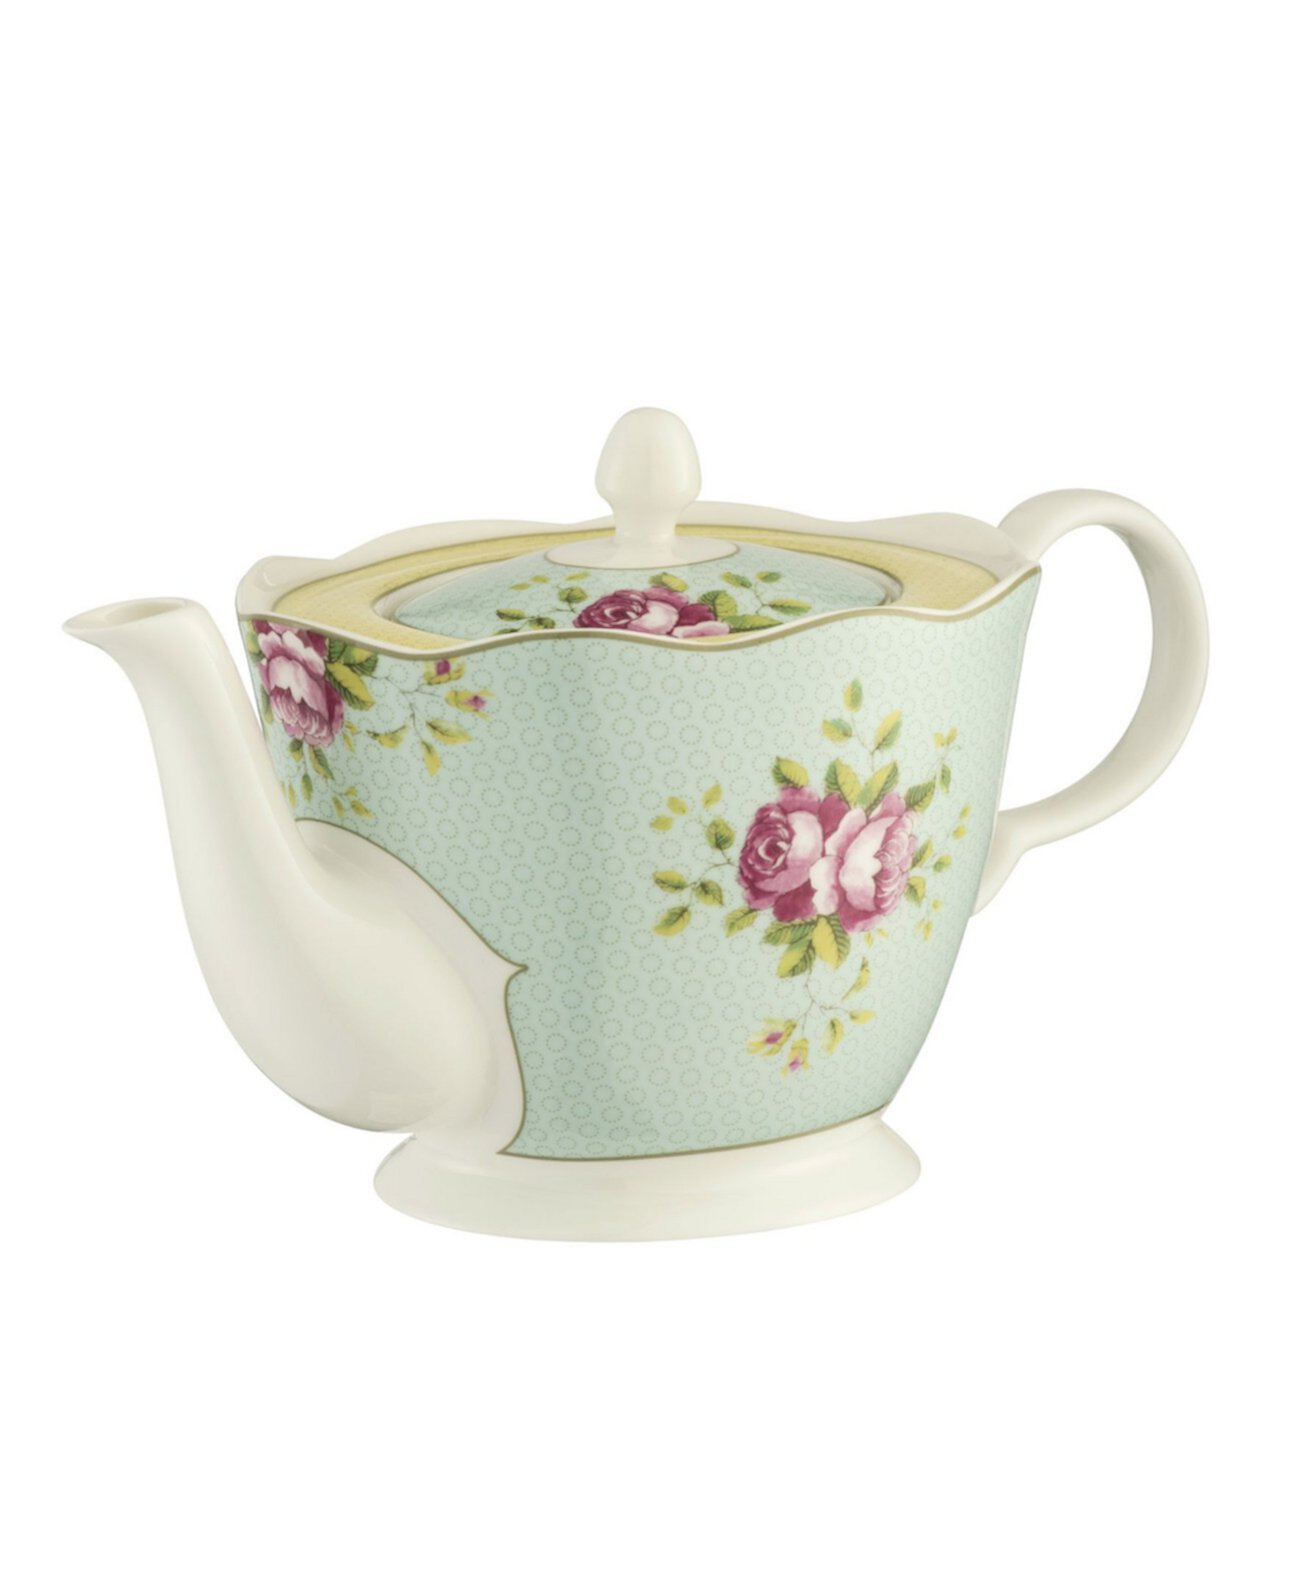 Архивный чайник с розой Aynsley China